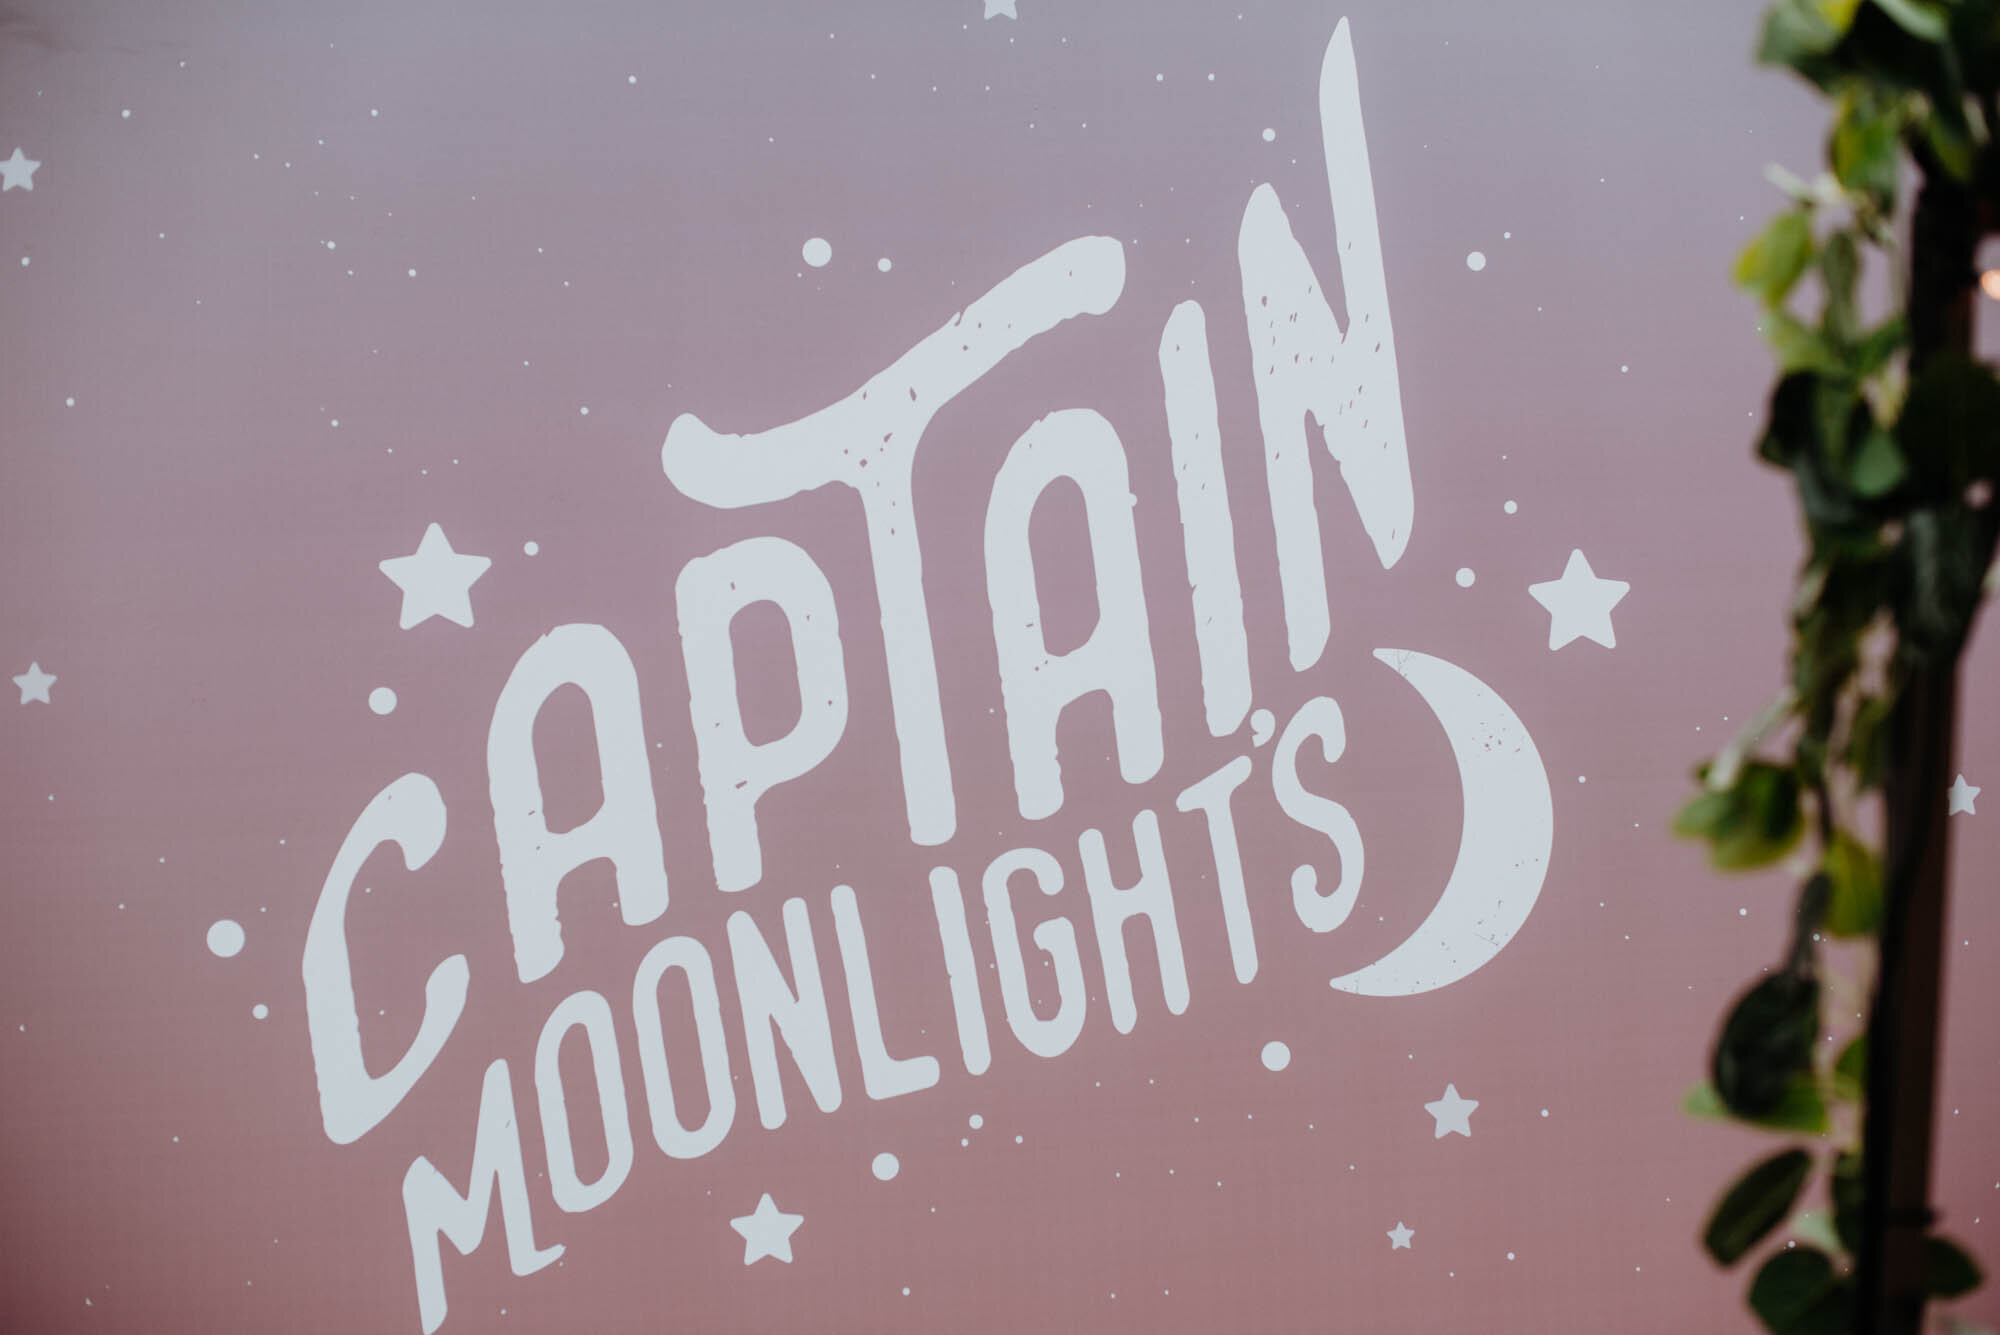 34_Captain Moonlights_Meaghan Coles__MKC3085.jpg